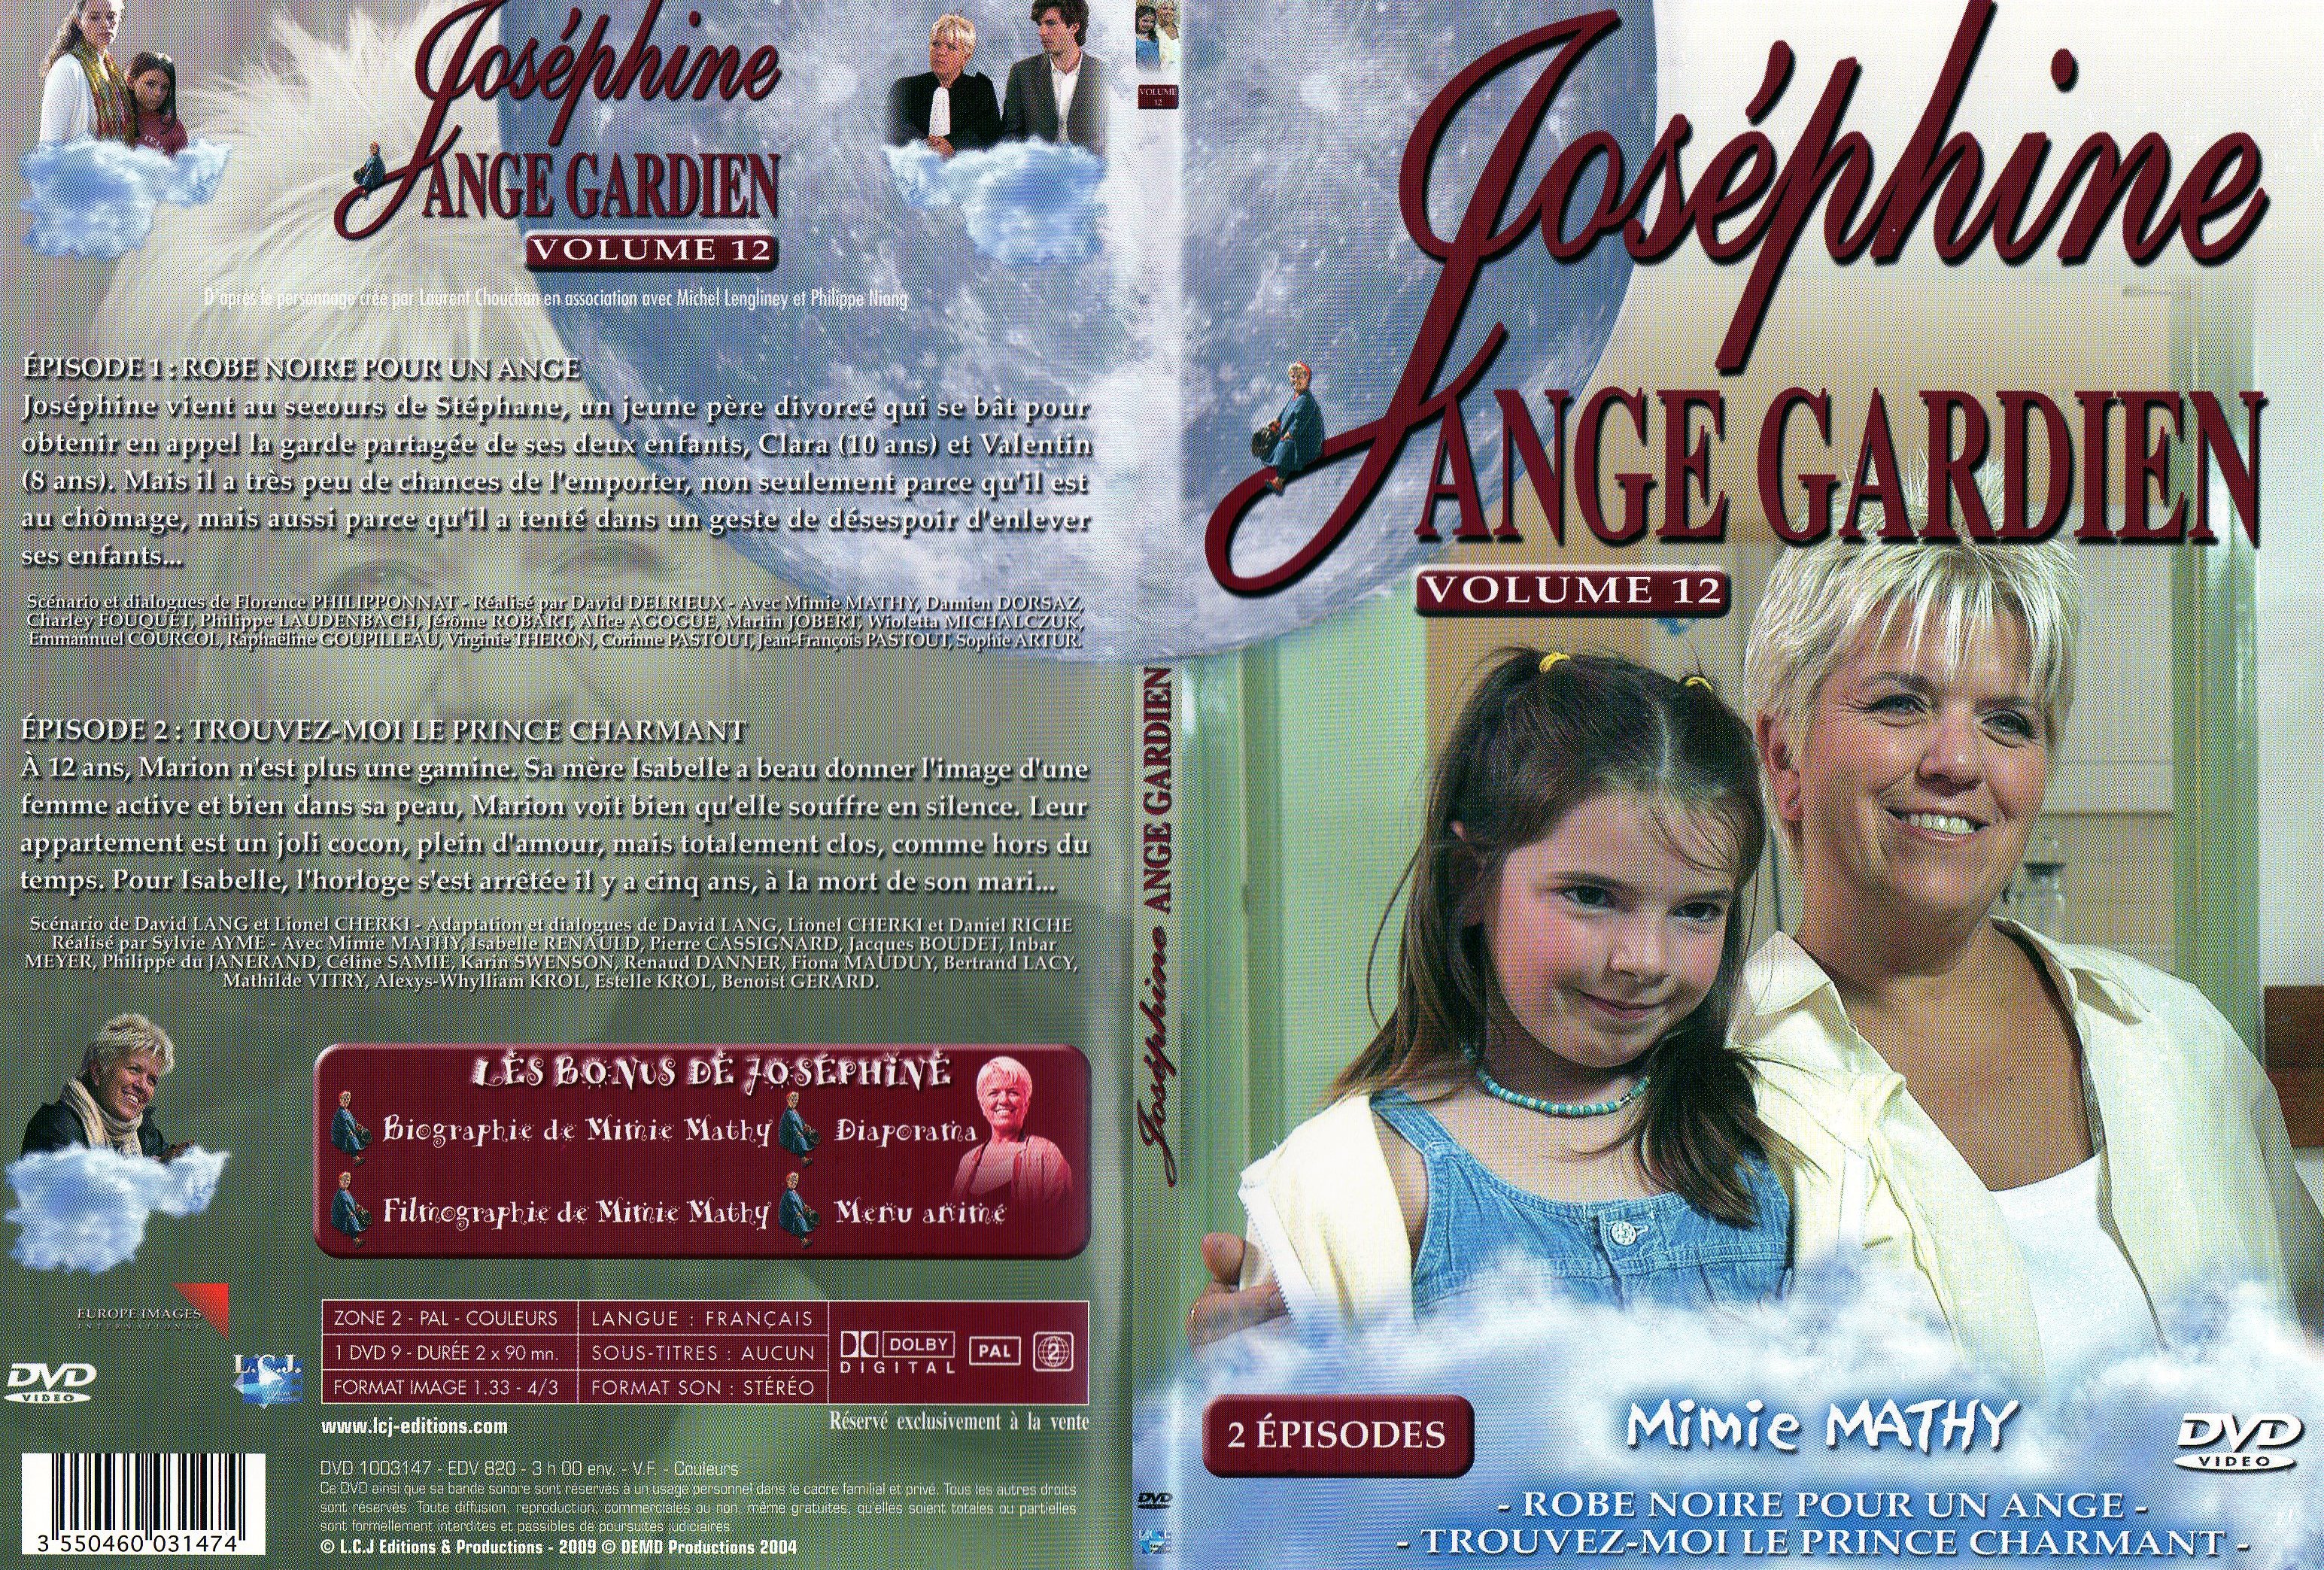 Jaquette DVD Josphine Ange Gardien saison 3 DVD 12